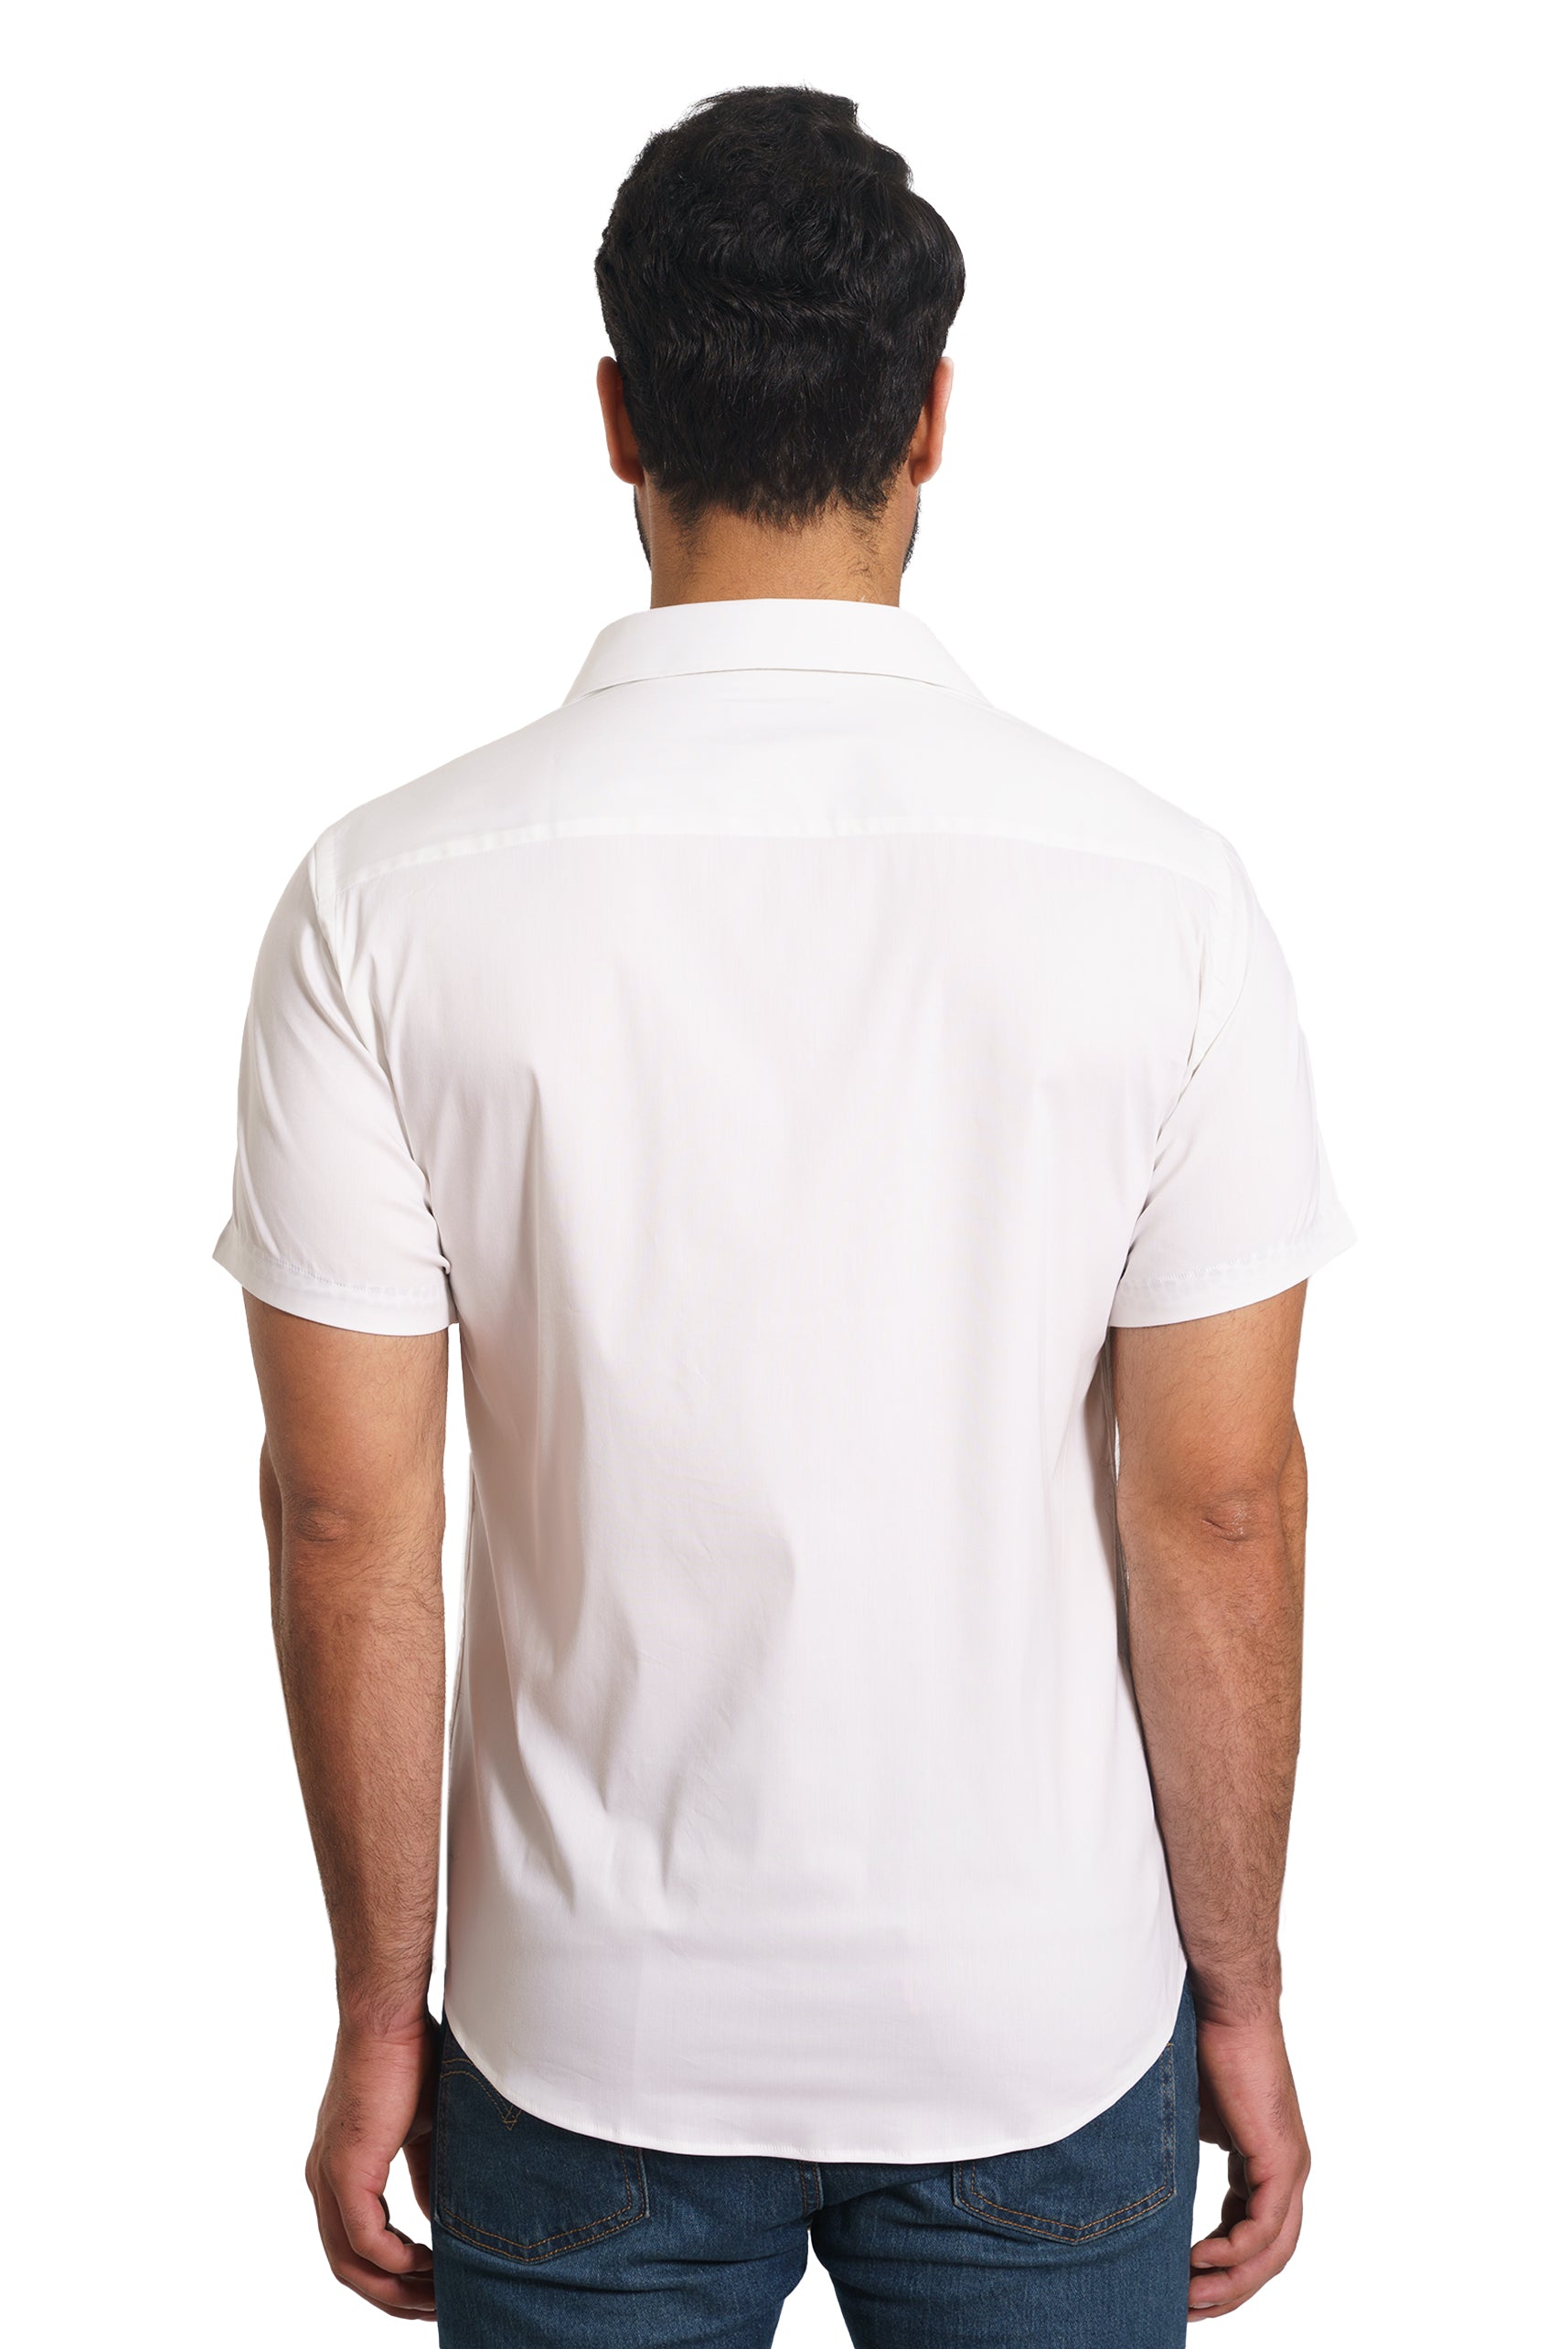 White Short Sleeve Shirt TH-2868SS Back